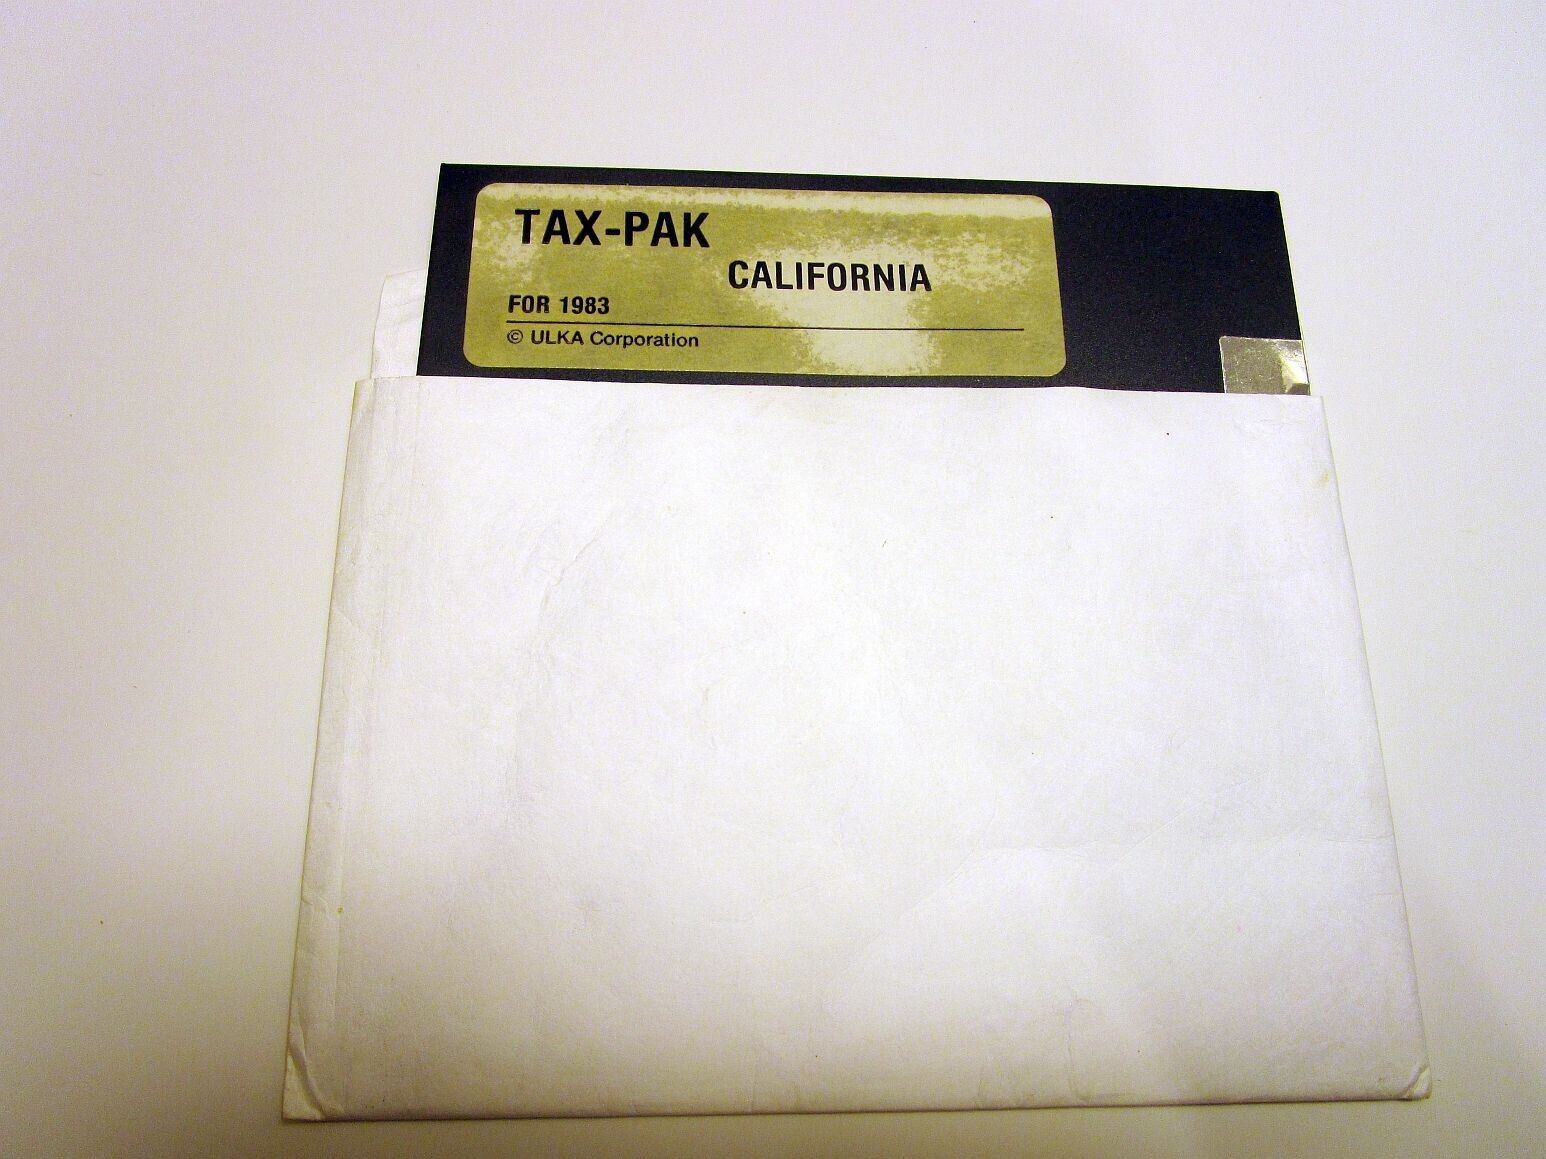 VERY RARE Tax-Pak California by Ulka Apple II+, Apple IIe, IIc, Apple IIGS